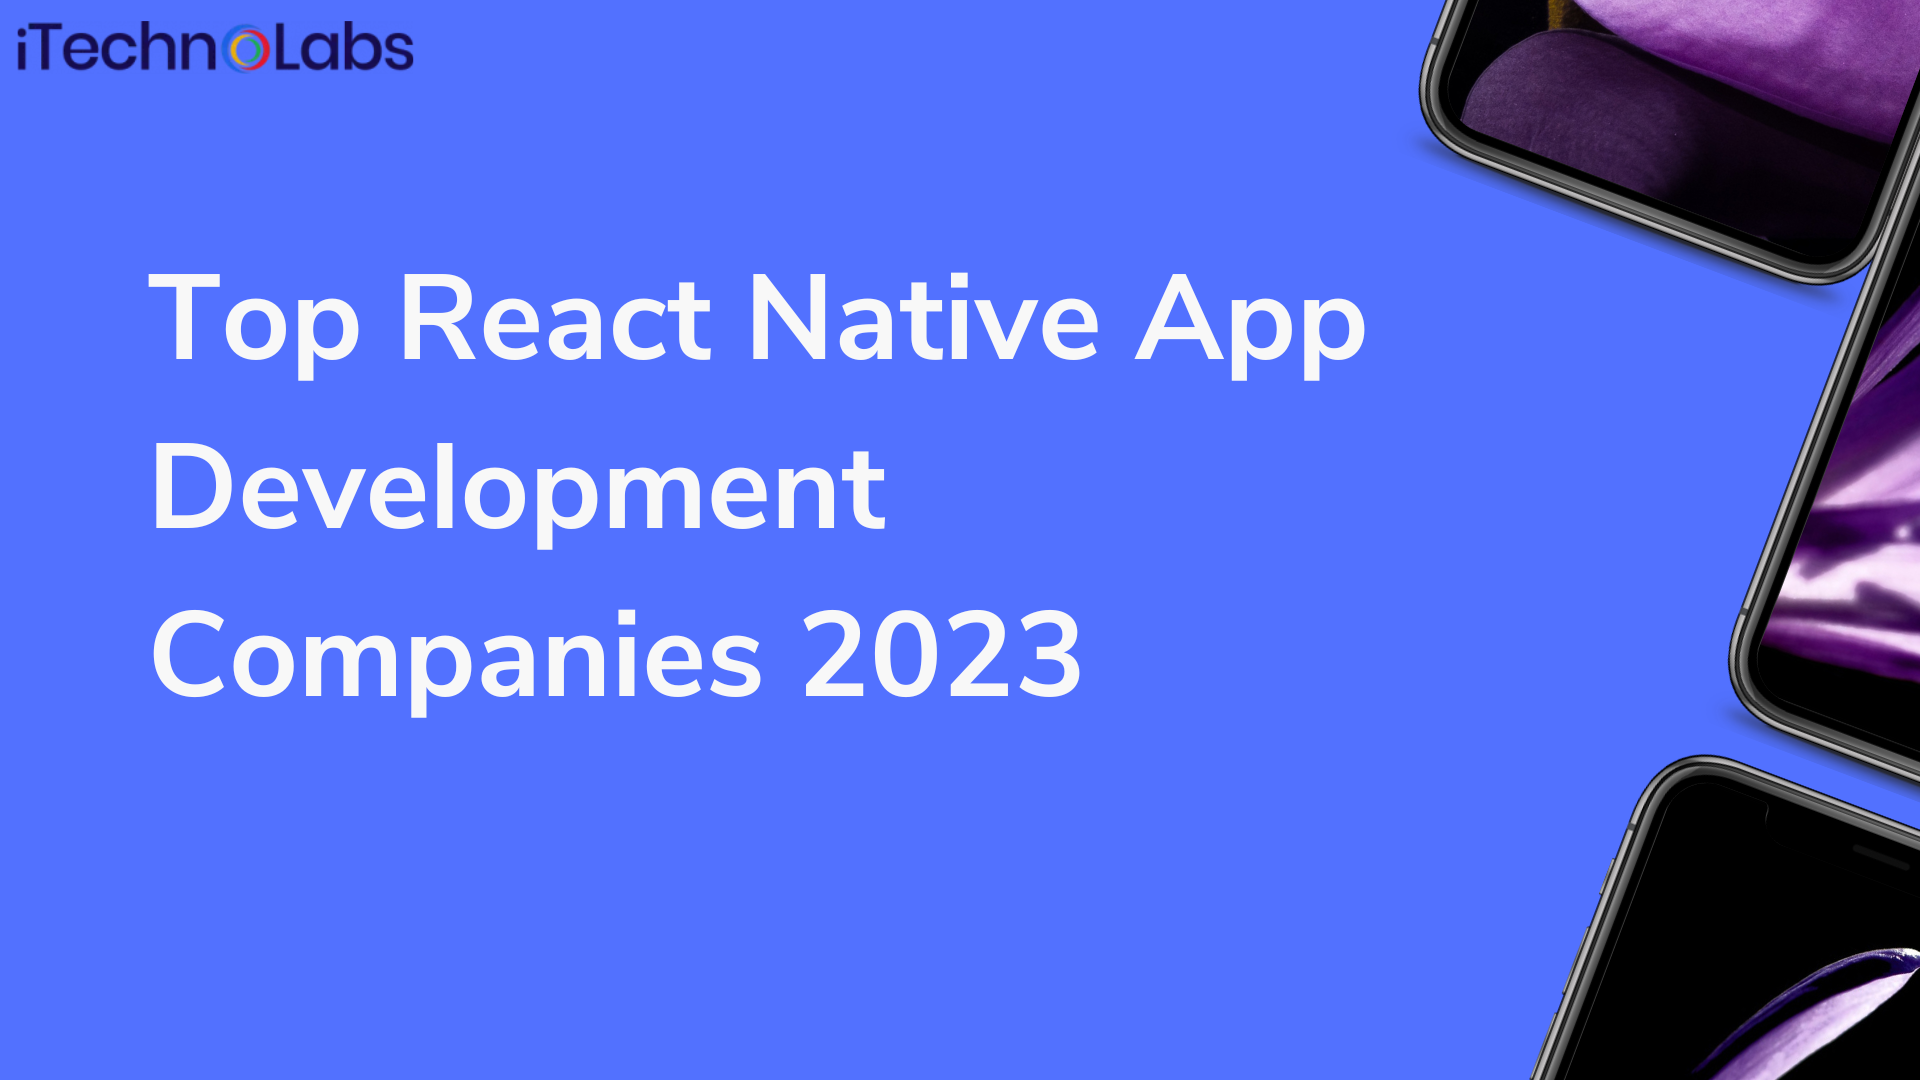 Top React Native App Development Companies 2023